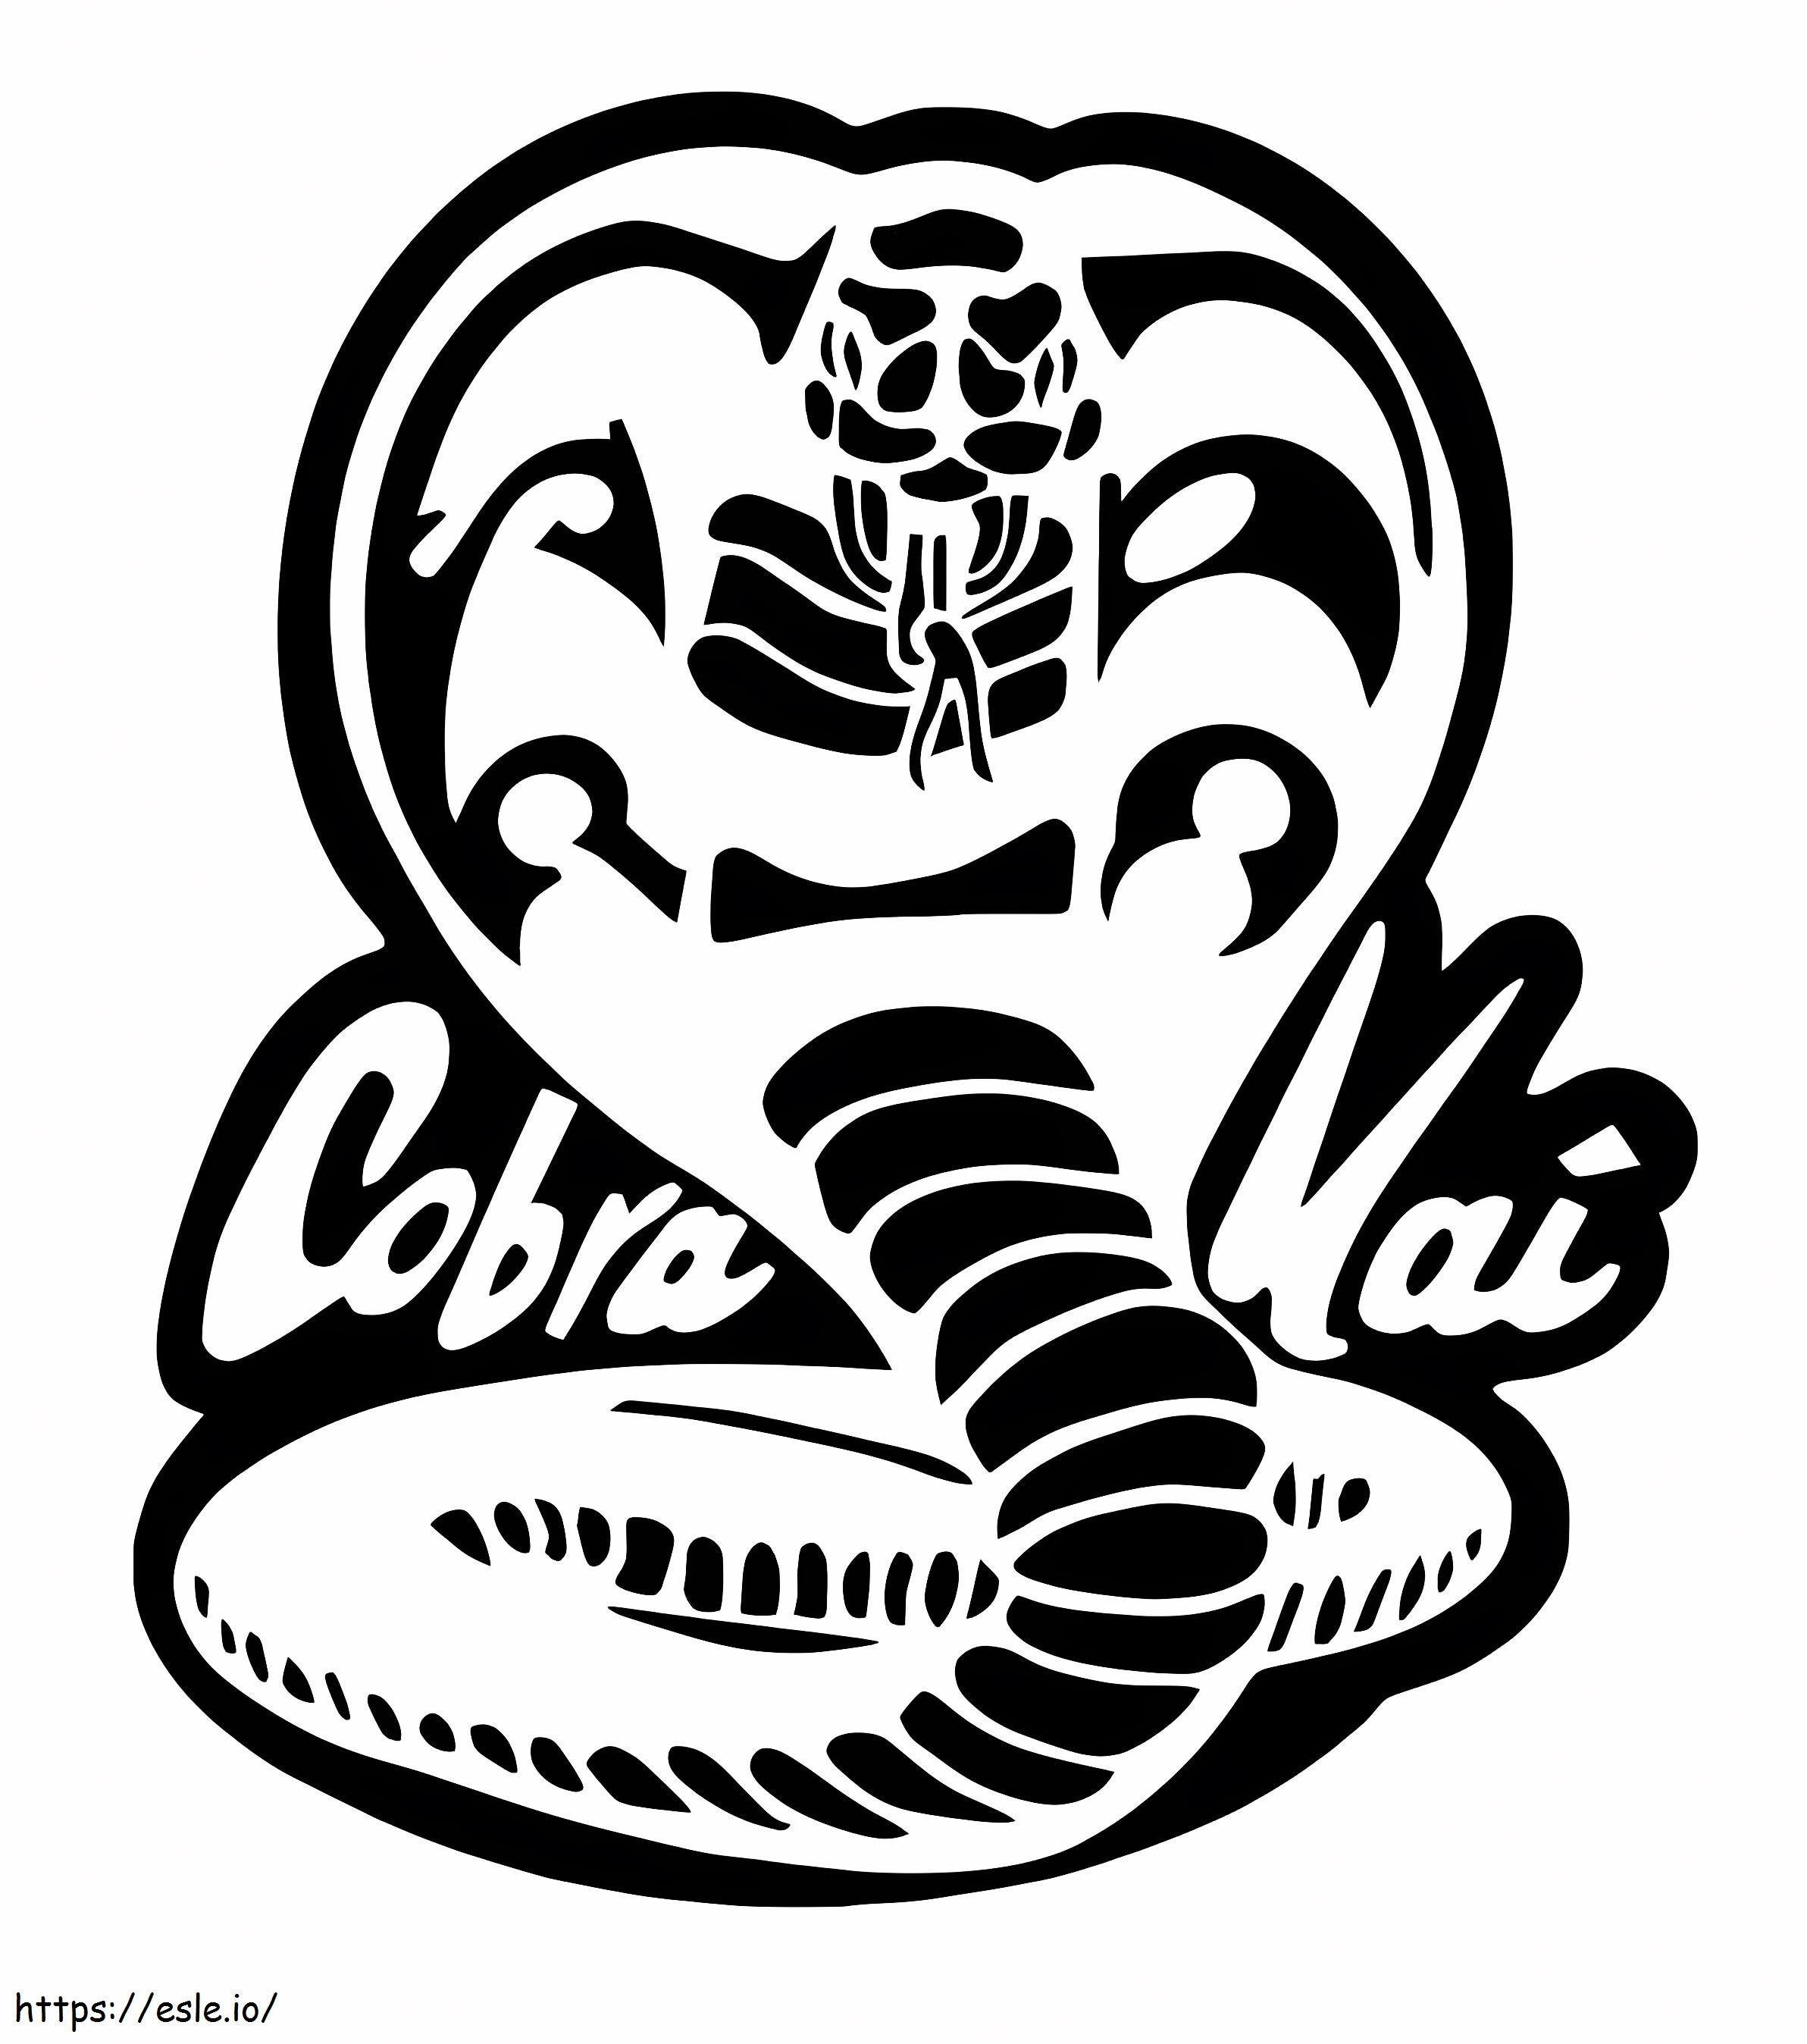 Cobra Kai-Logo ausmalbilder